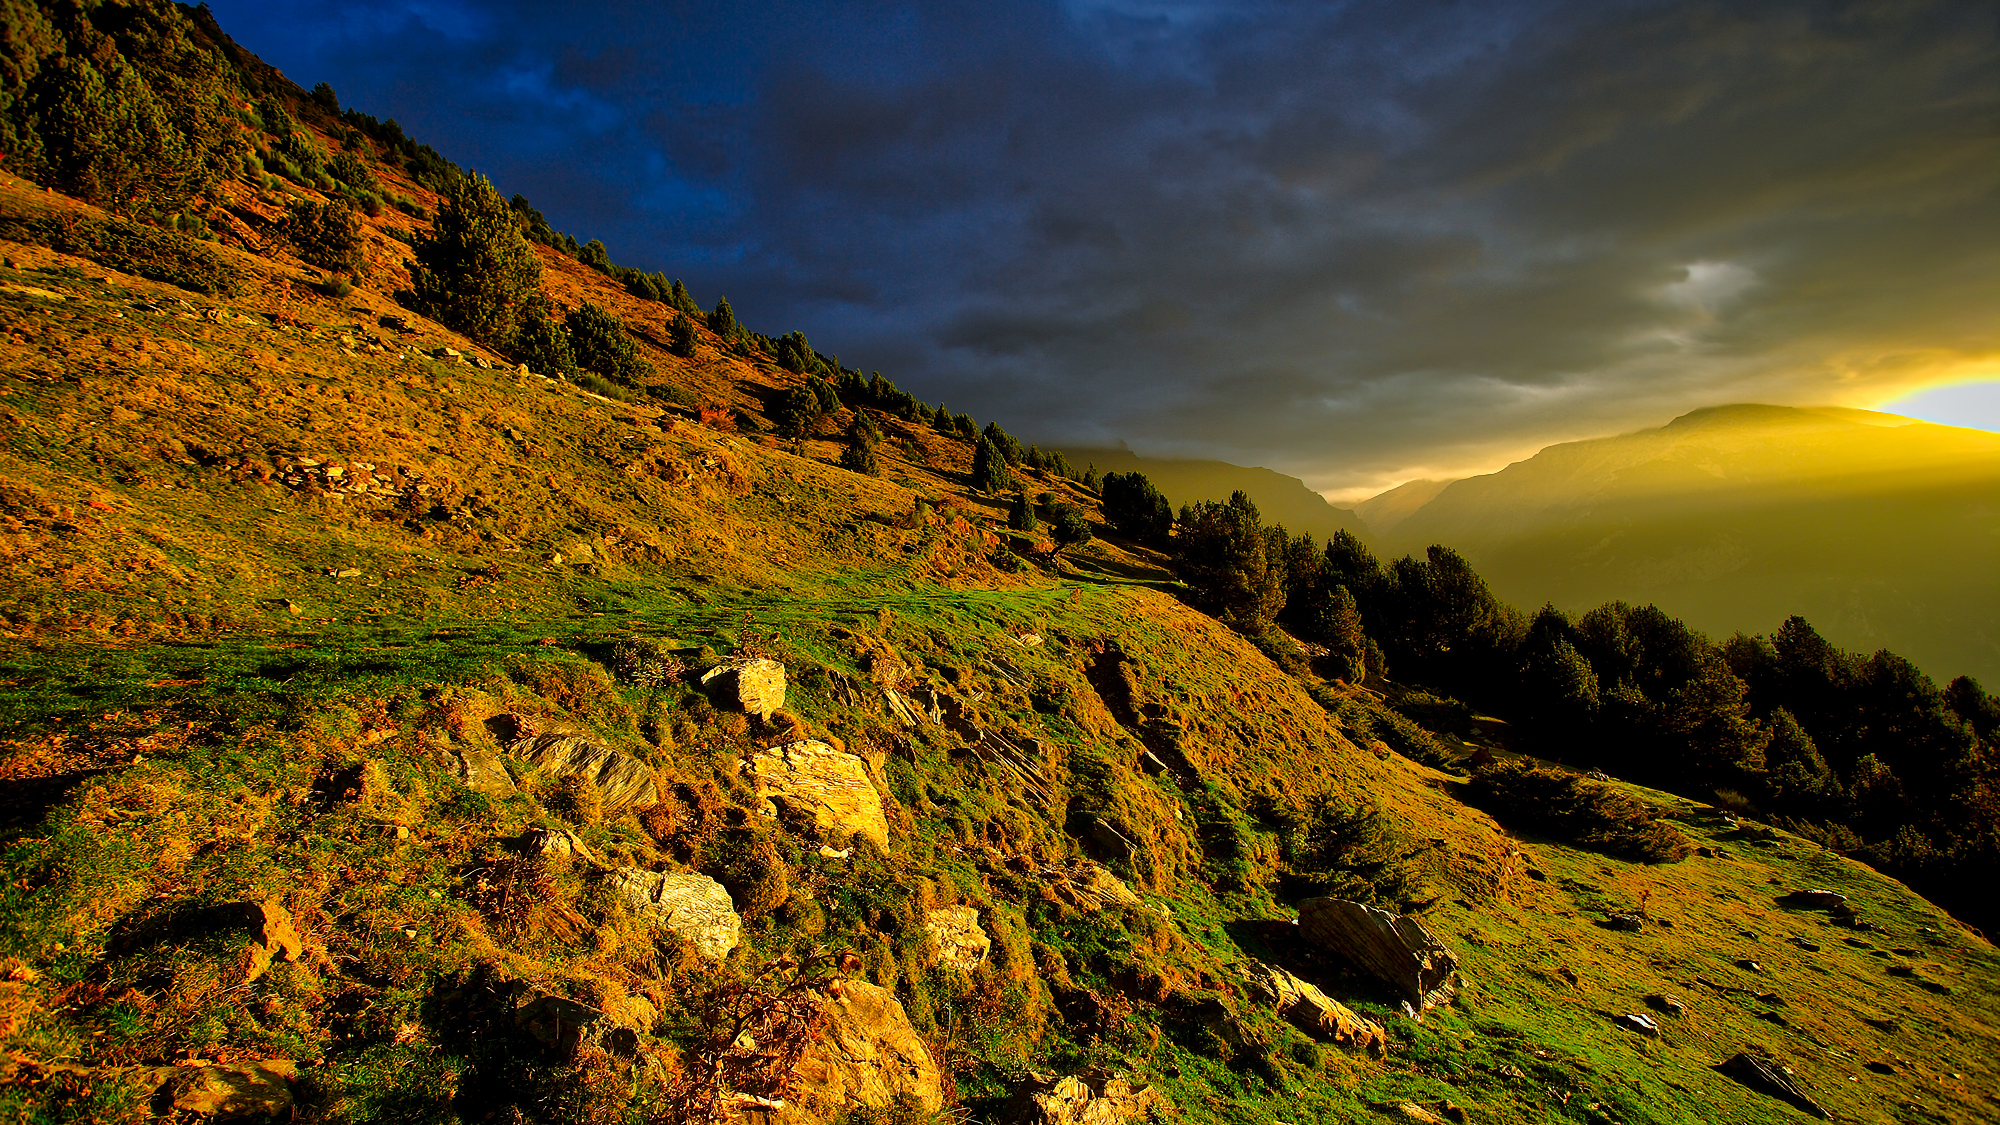 Paisajes, naturaleza, fotografía de paisajes, fotografía de naturaleza, montaña, prados verdes, atardecer, Pirineos, lérida, lleida